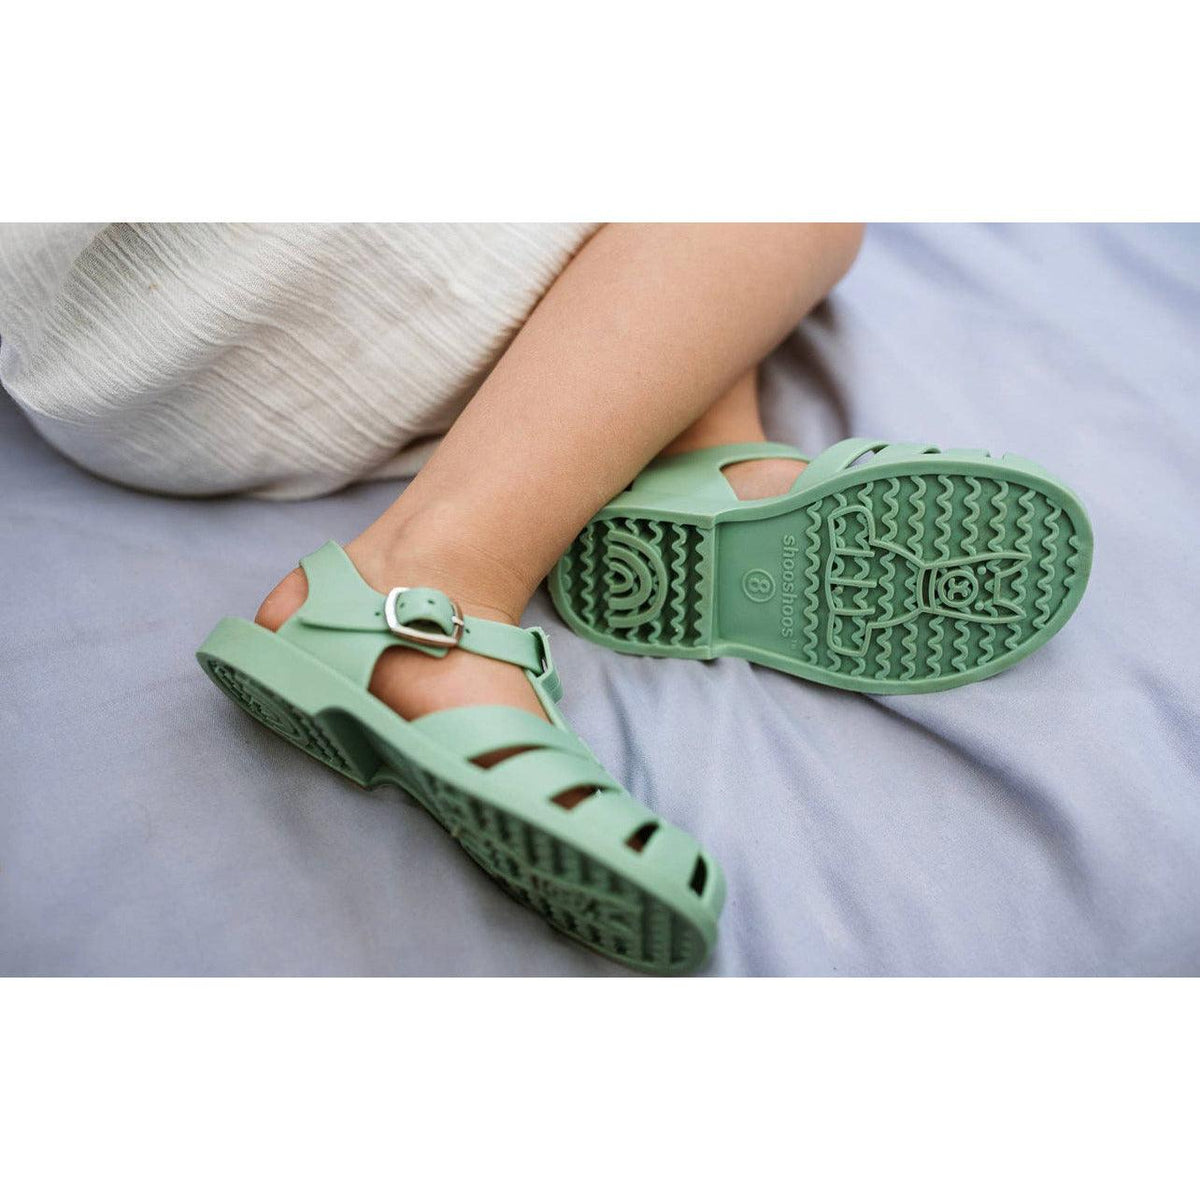 Shooshoos | Kid's Jelly Sandals | Summer Waterproof Sandals - becauseofadi